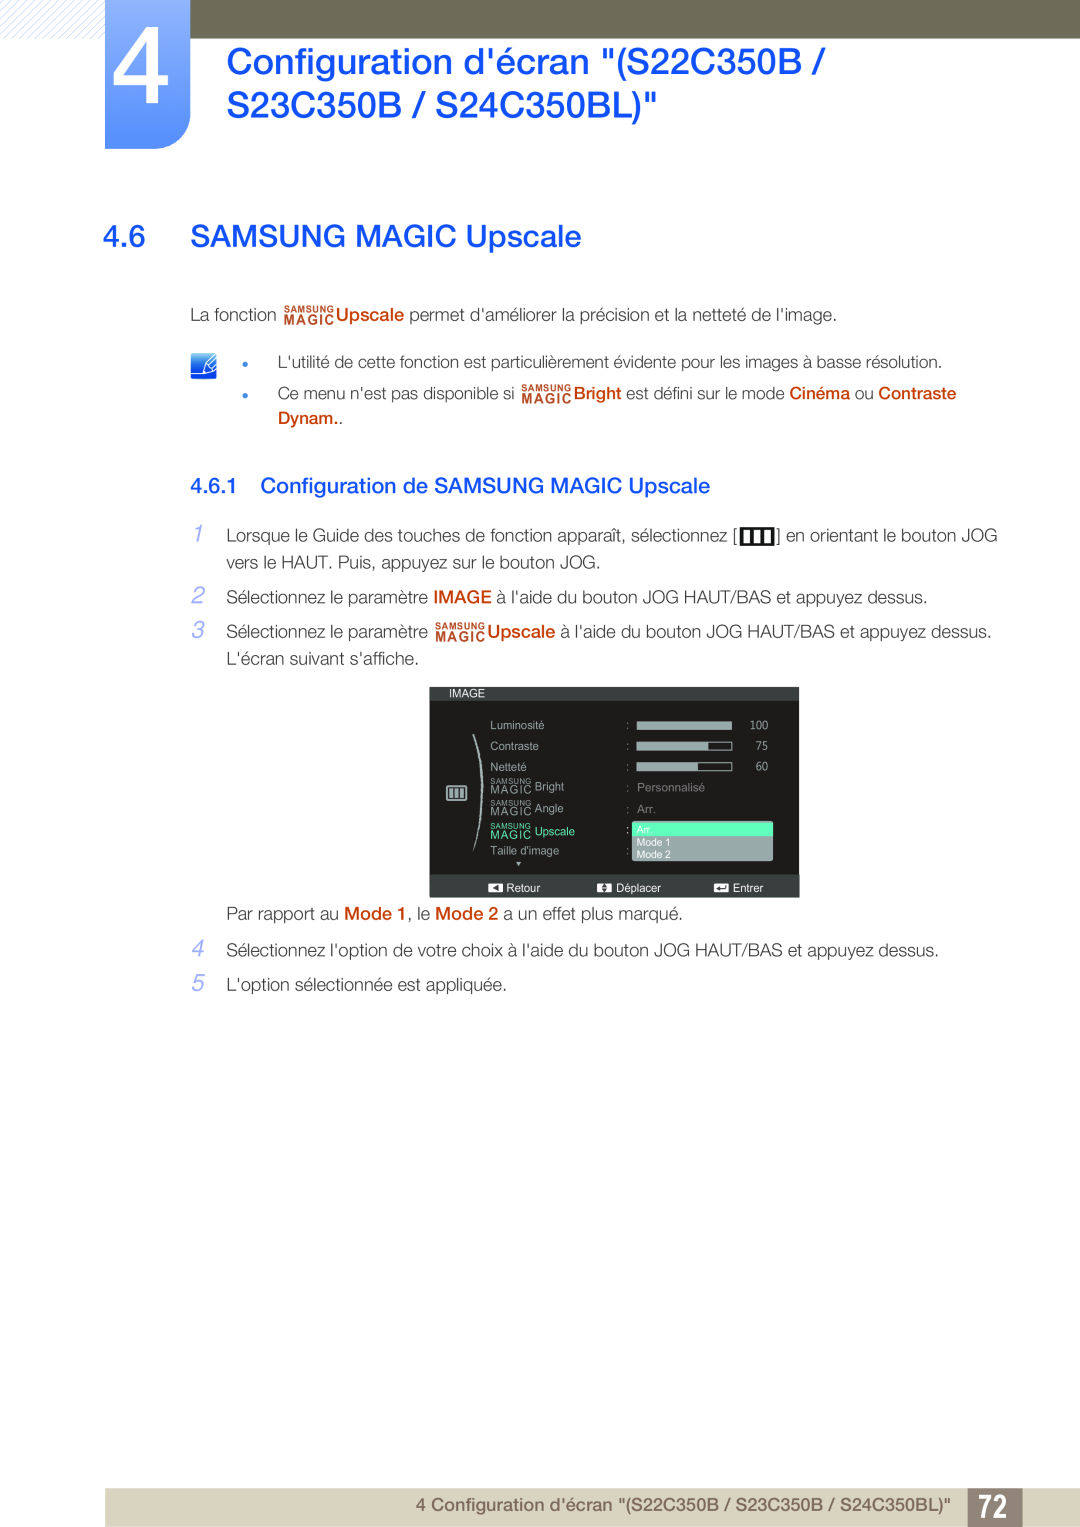 Samsung LS23C350HS/EN Configuration de SAMSUNG MAGIC Upscale, Configuration décran S22C350B / S23C350B / S24C350BL 